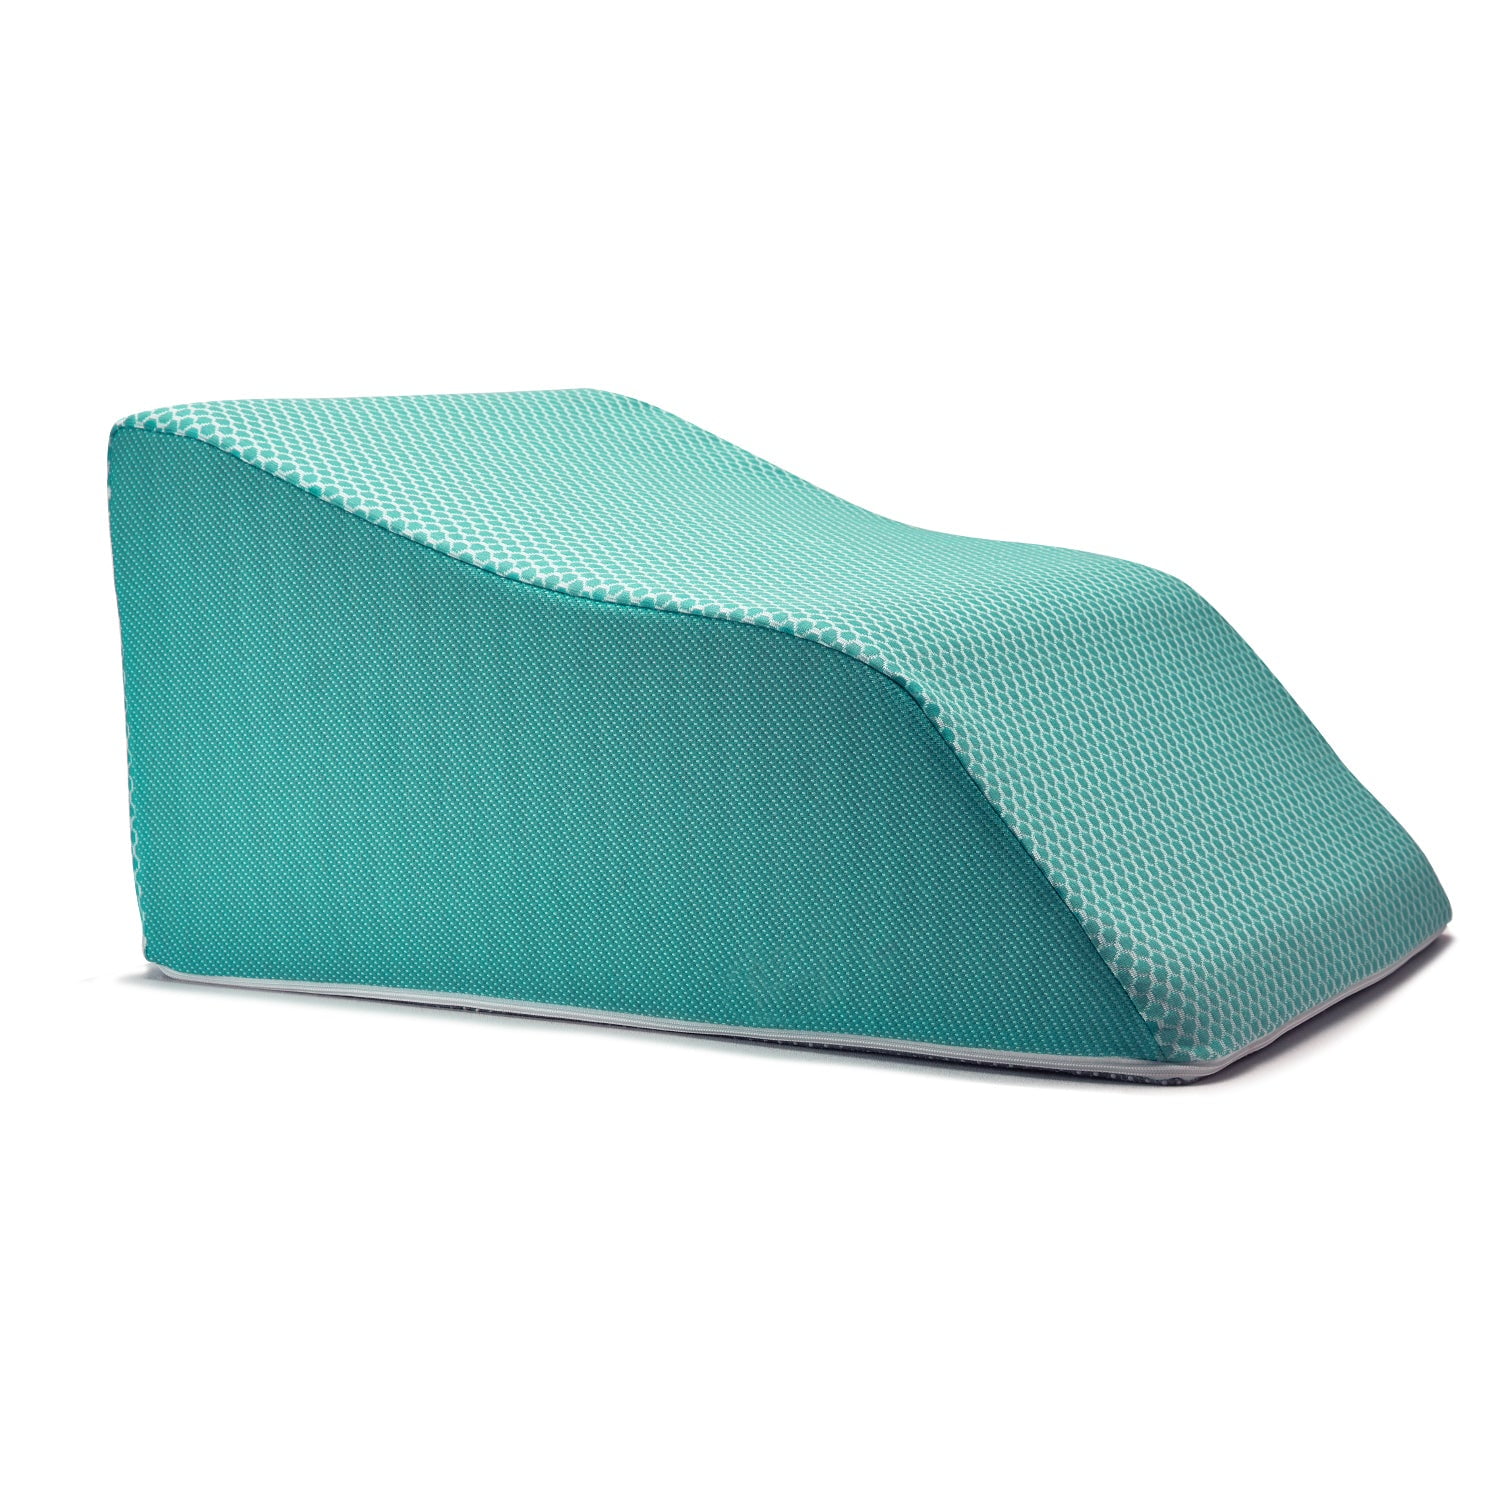 Leg Rest Pillow - Leg Elevation Wedge & Support - Vive Health